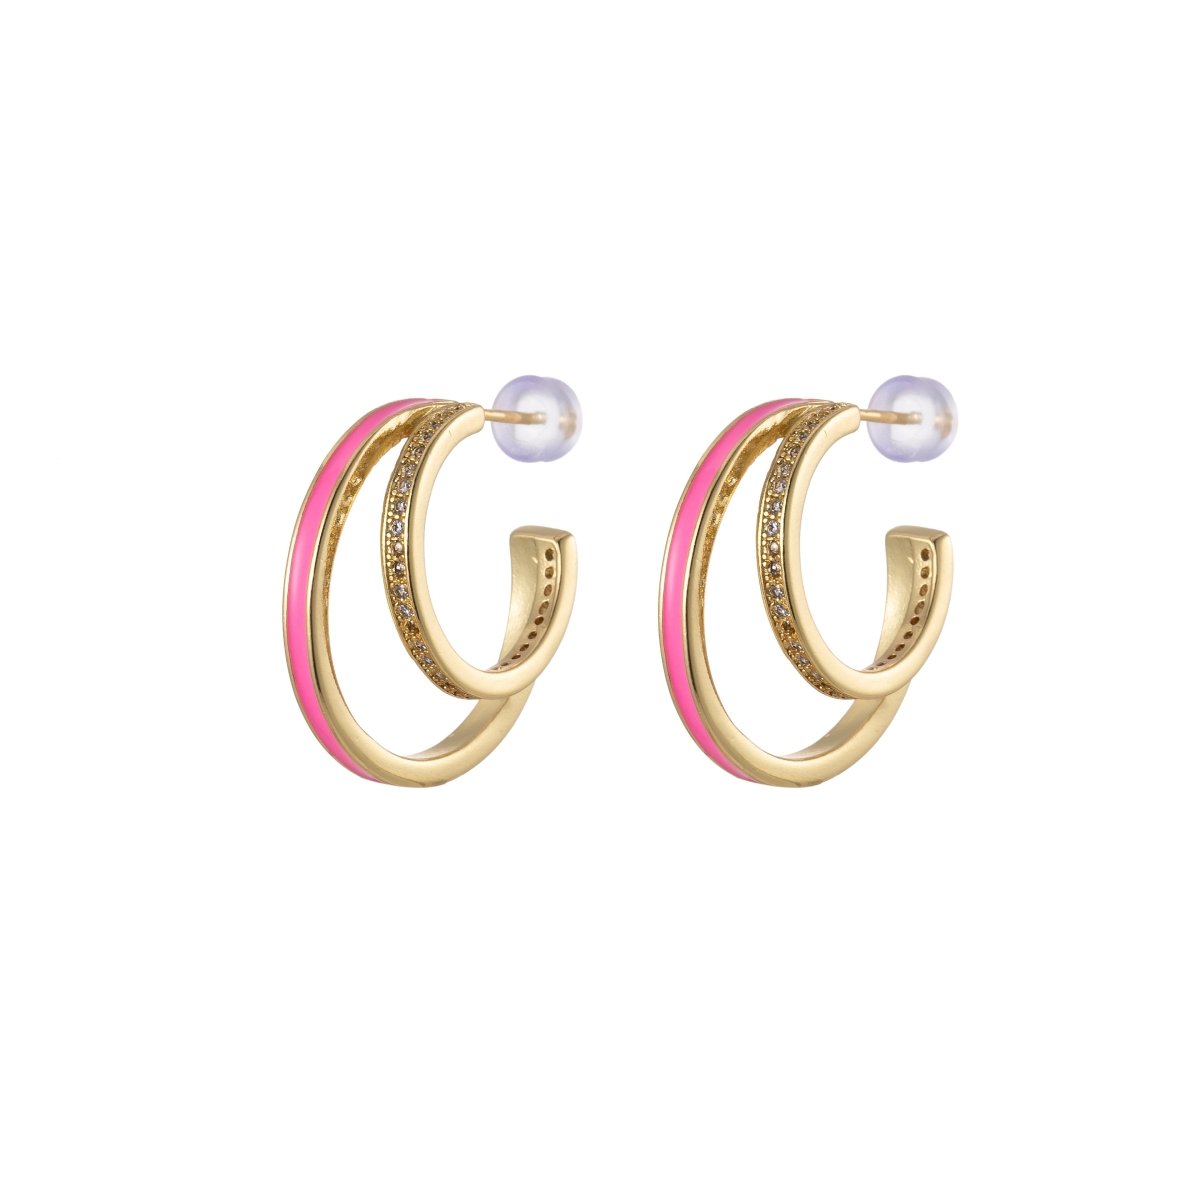 Enamel Hoops Gold, 14K Gold Filled Hoops, Large Gold Hoop Earrings, Small Hoops Black Pink Red White Earrings, Chunky Light Hoops P-206~P-209 - DLUXCA